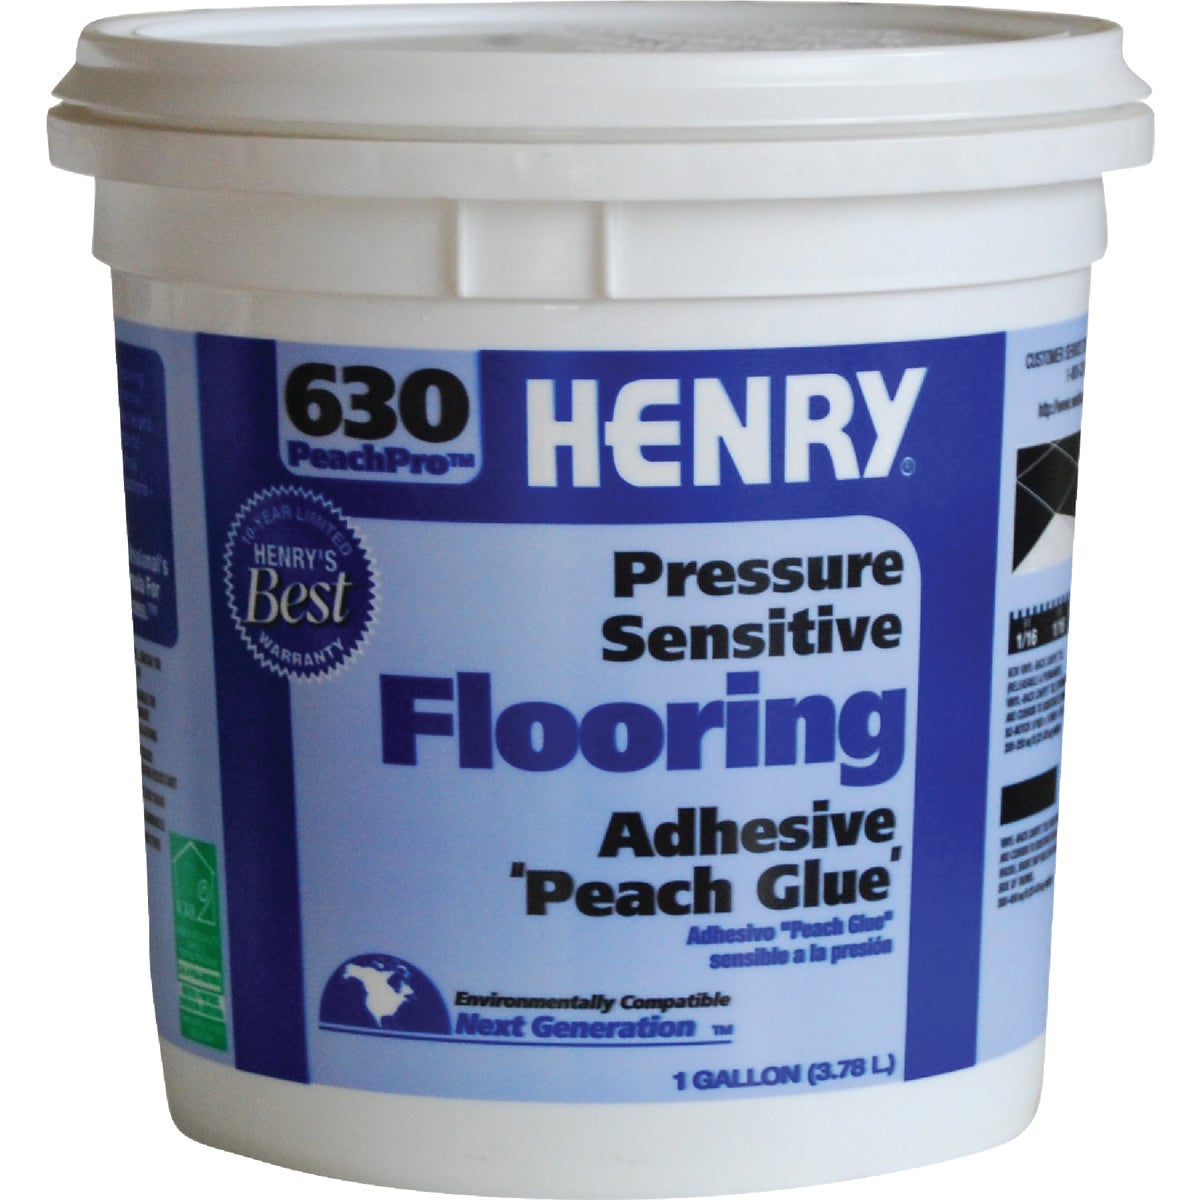 Item 276490, Henry 630 pressure sensitive peach glue flooring adhesive.